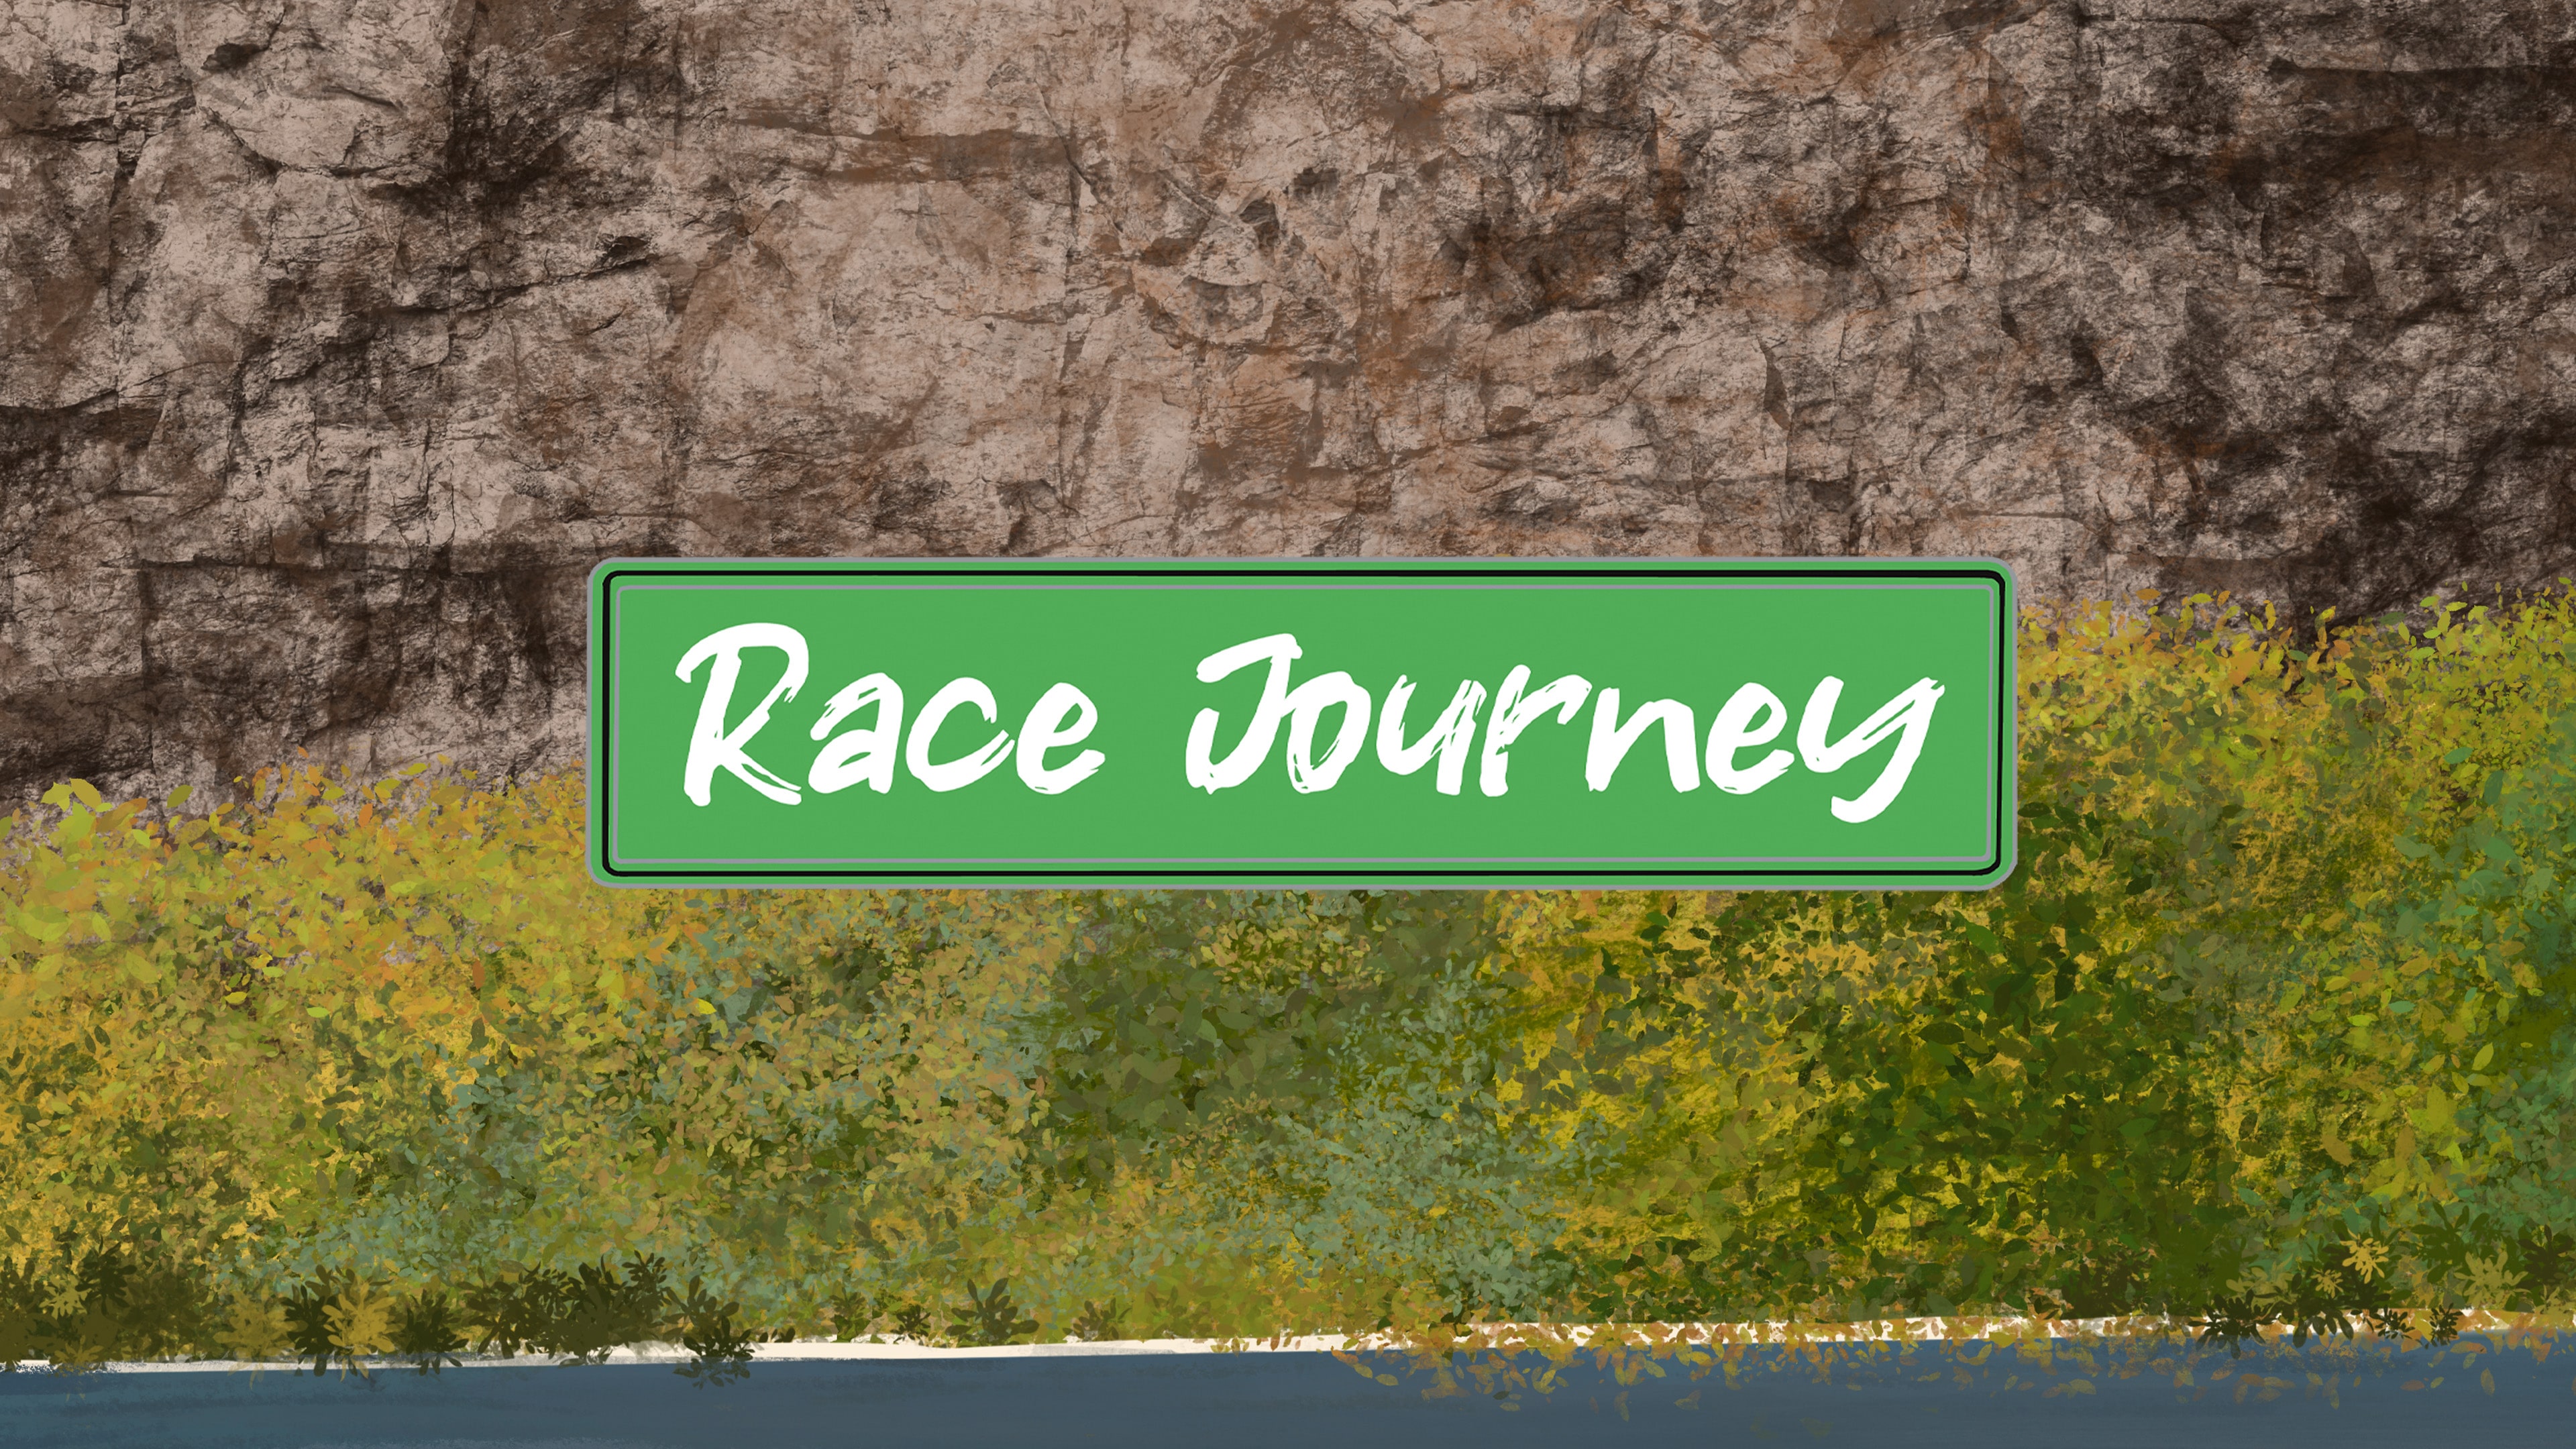 Race Journey